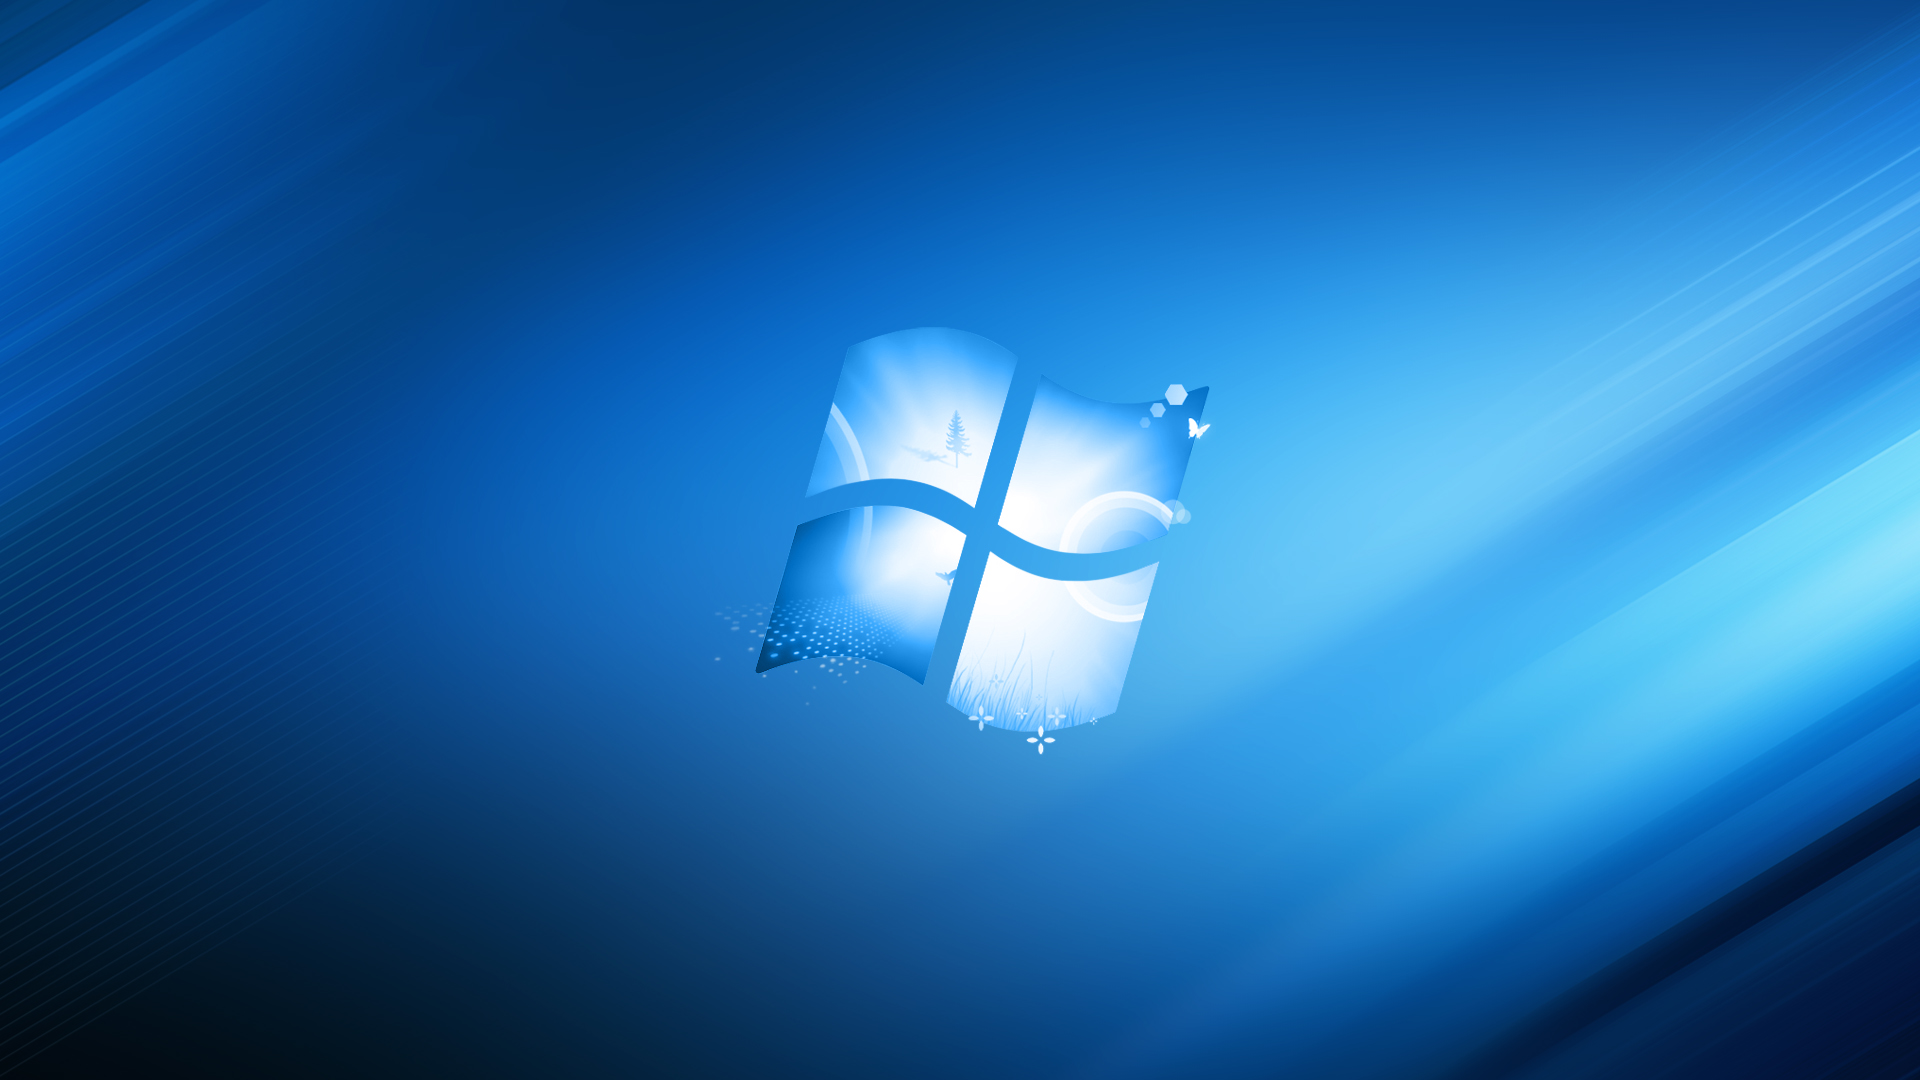 Windows 8 Wallpaper 7 windows 8 28120576 1920 1080jpg